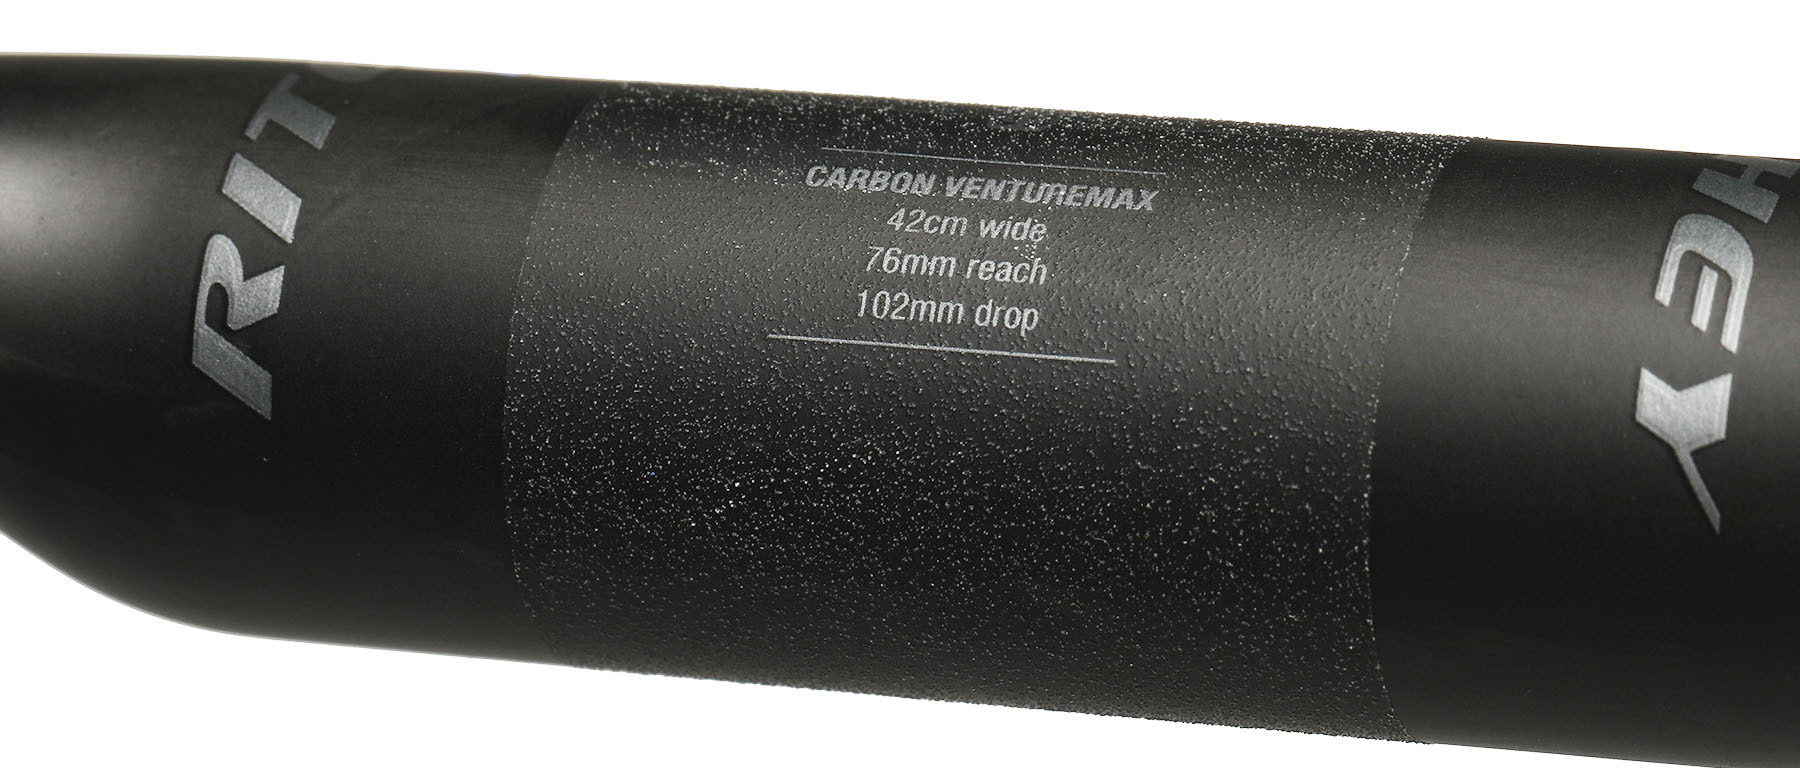 Ritchey WCS Carbon VentureMax Handlebar